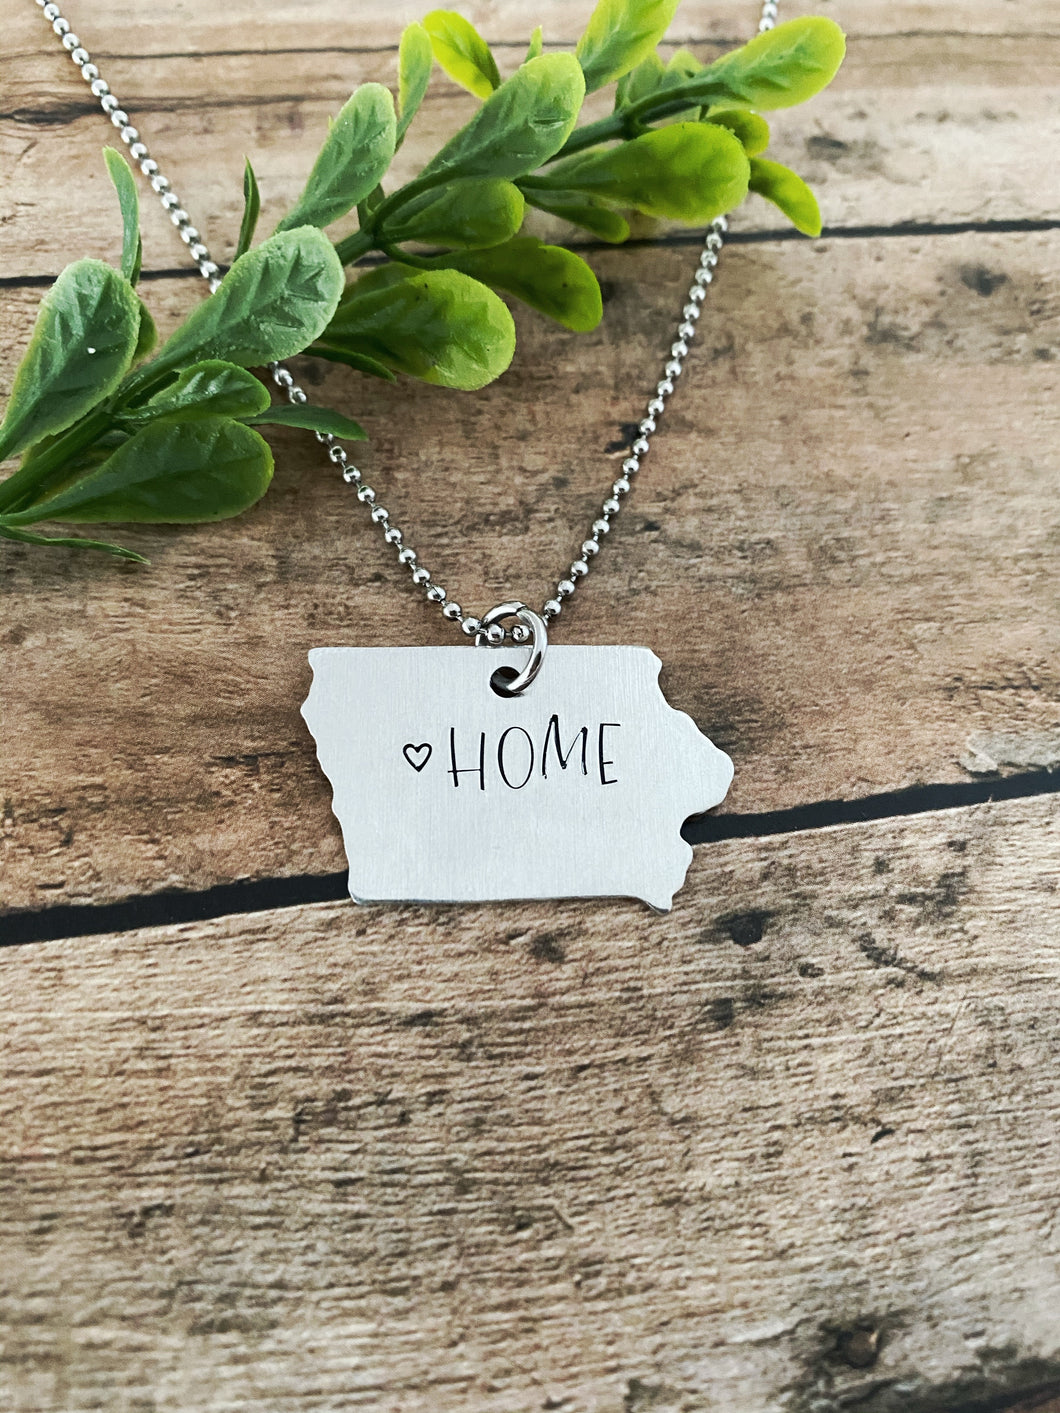 Iowa “home” necklace